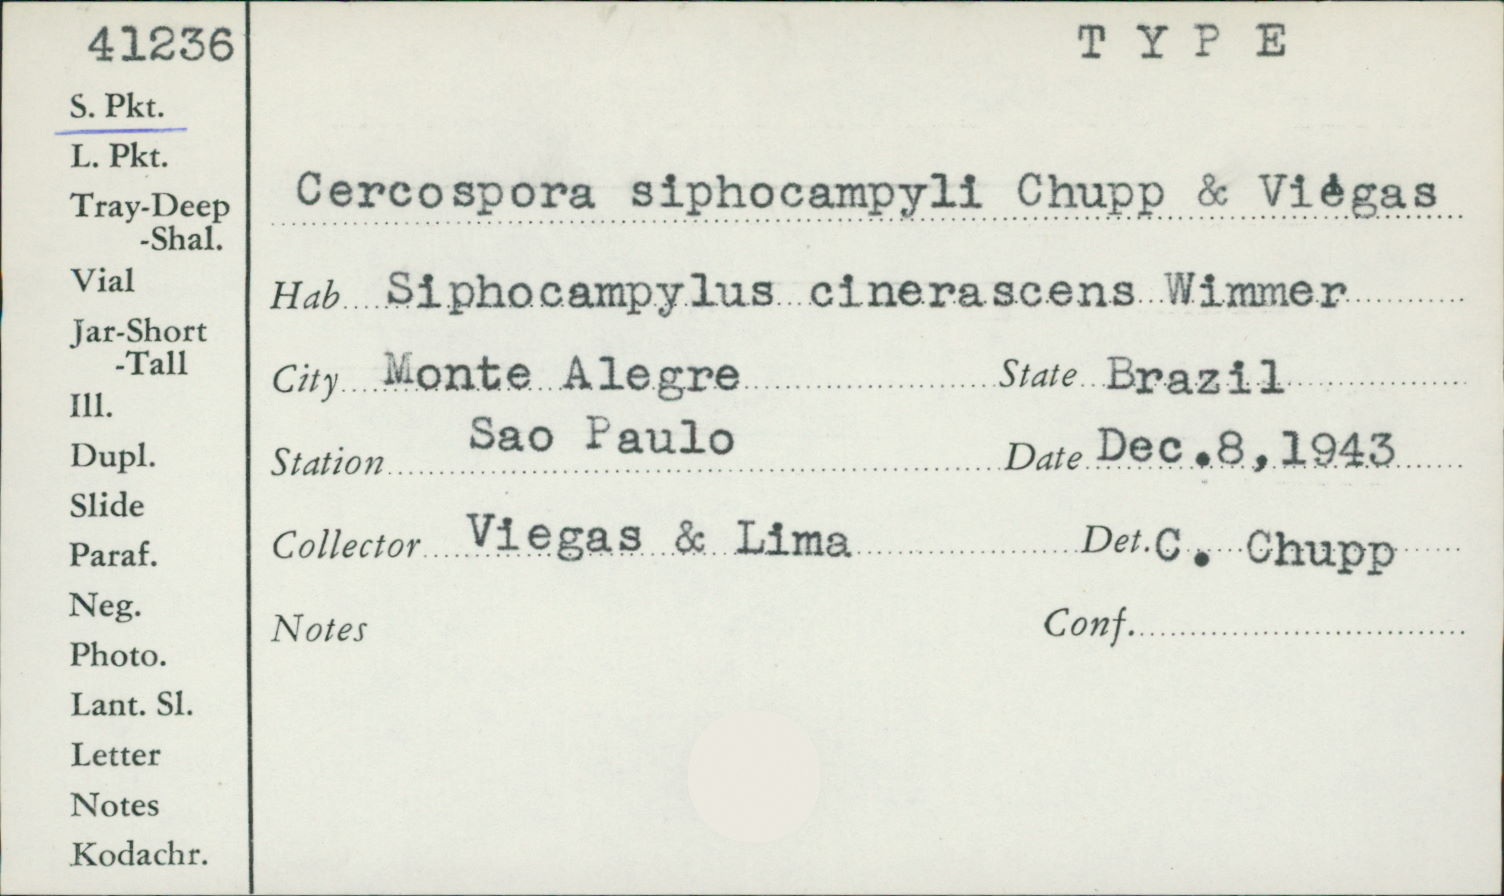 Cercospora siphocampyli image